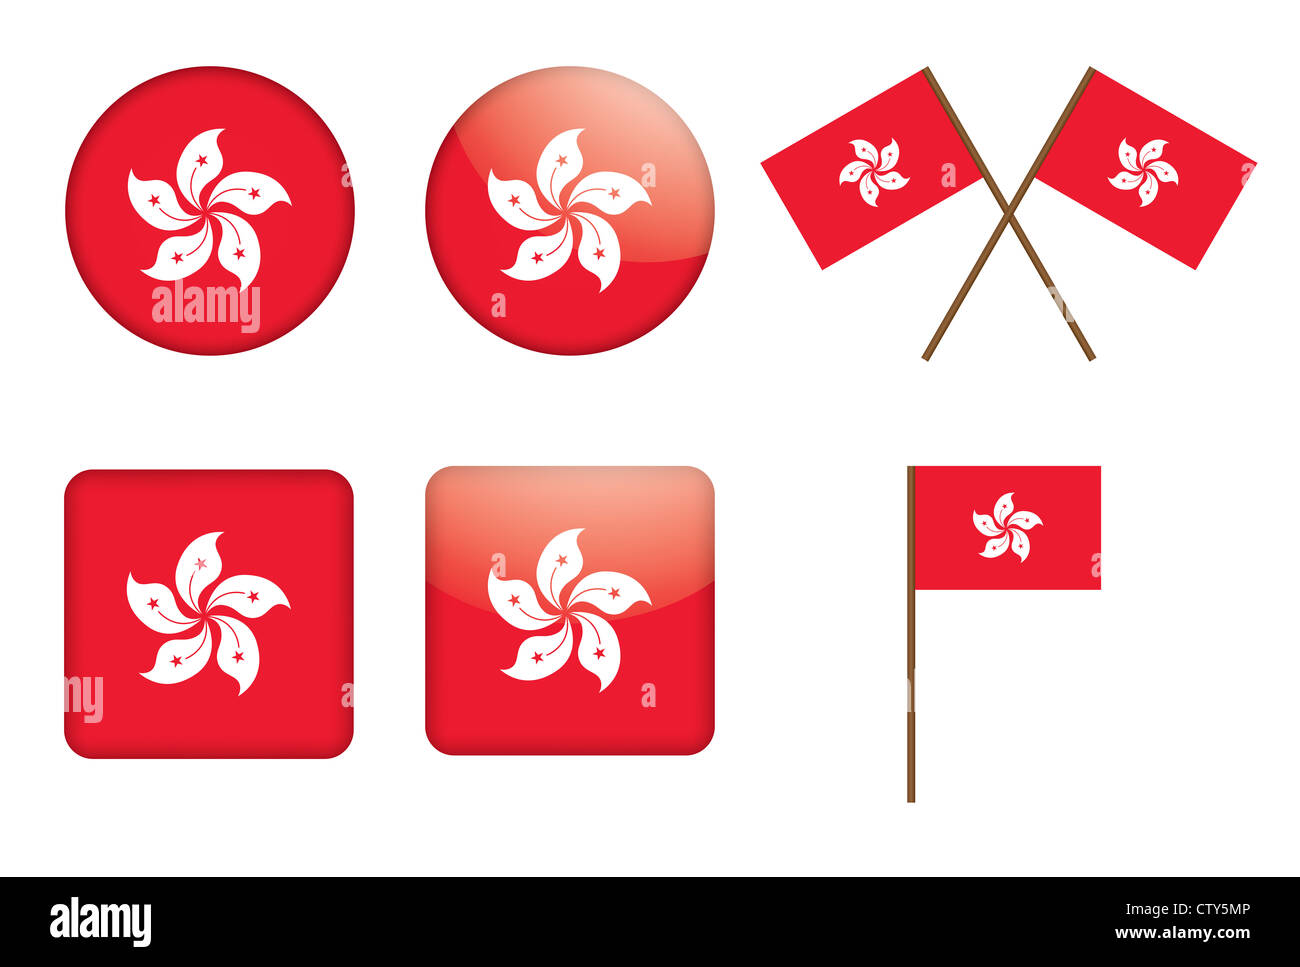 set of badges with flag of Hong Kong illustration Stock Photo